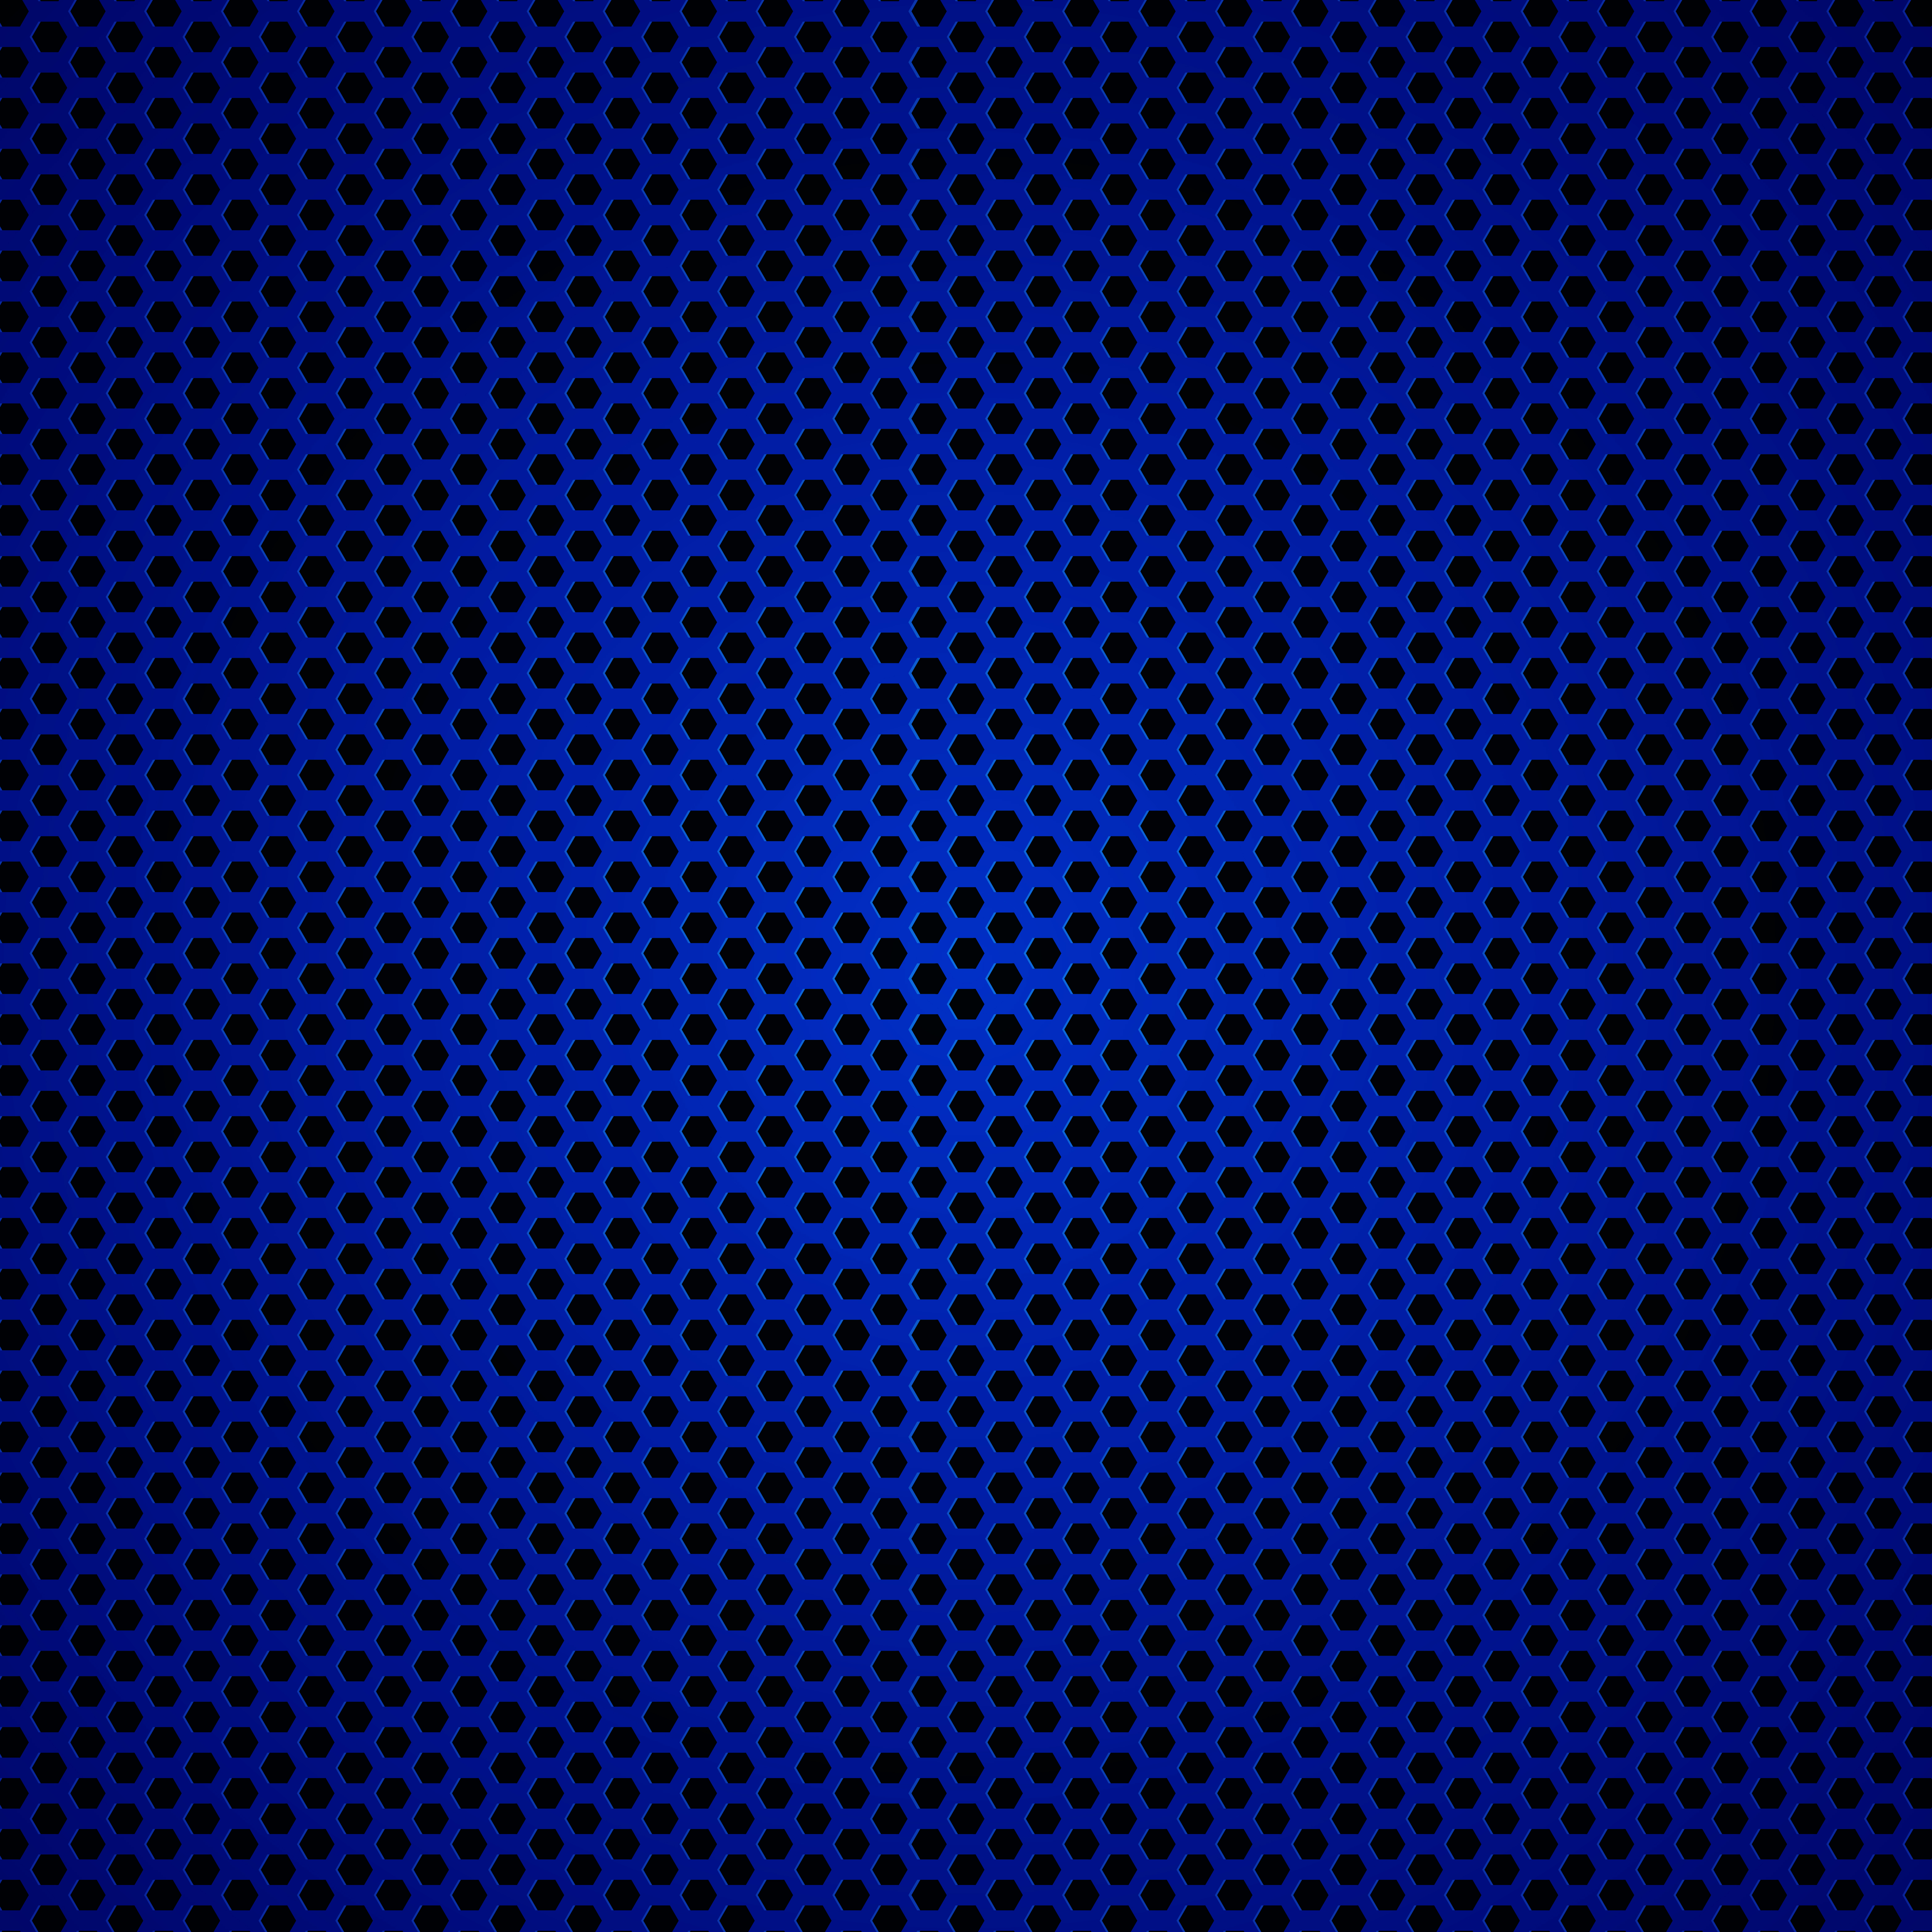 Blue carbon fiber texture wallpapers picture hd download